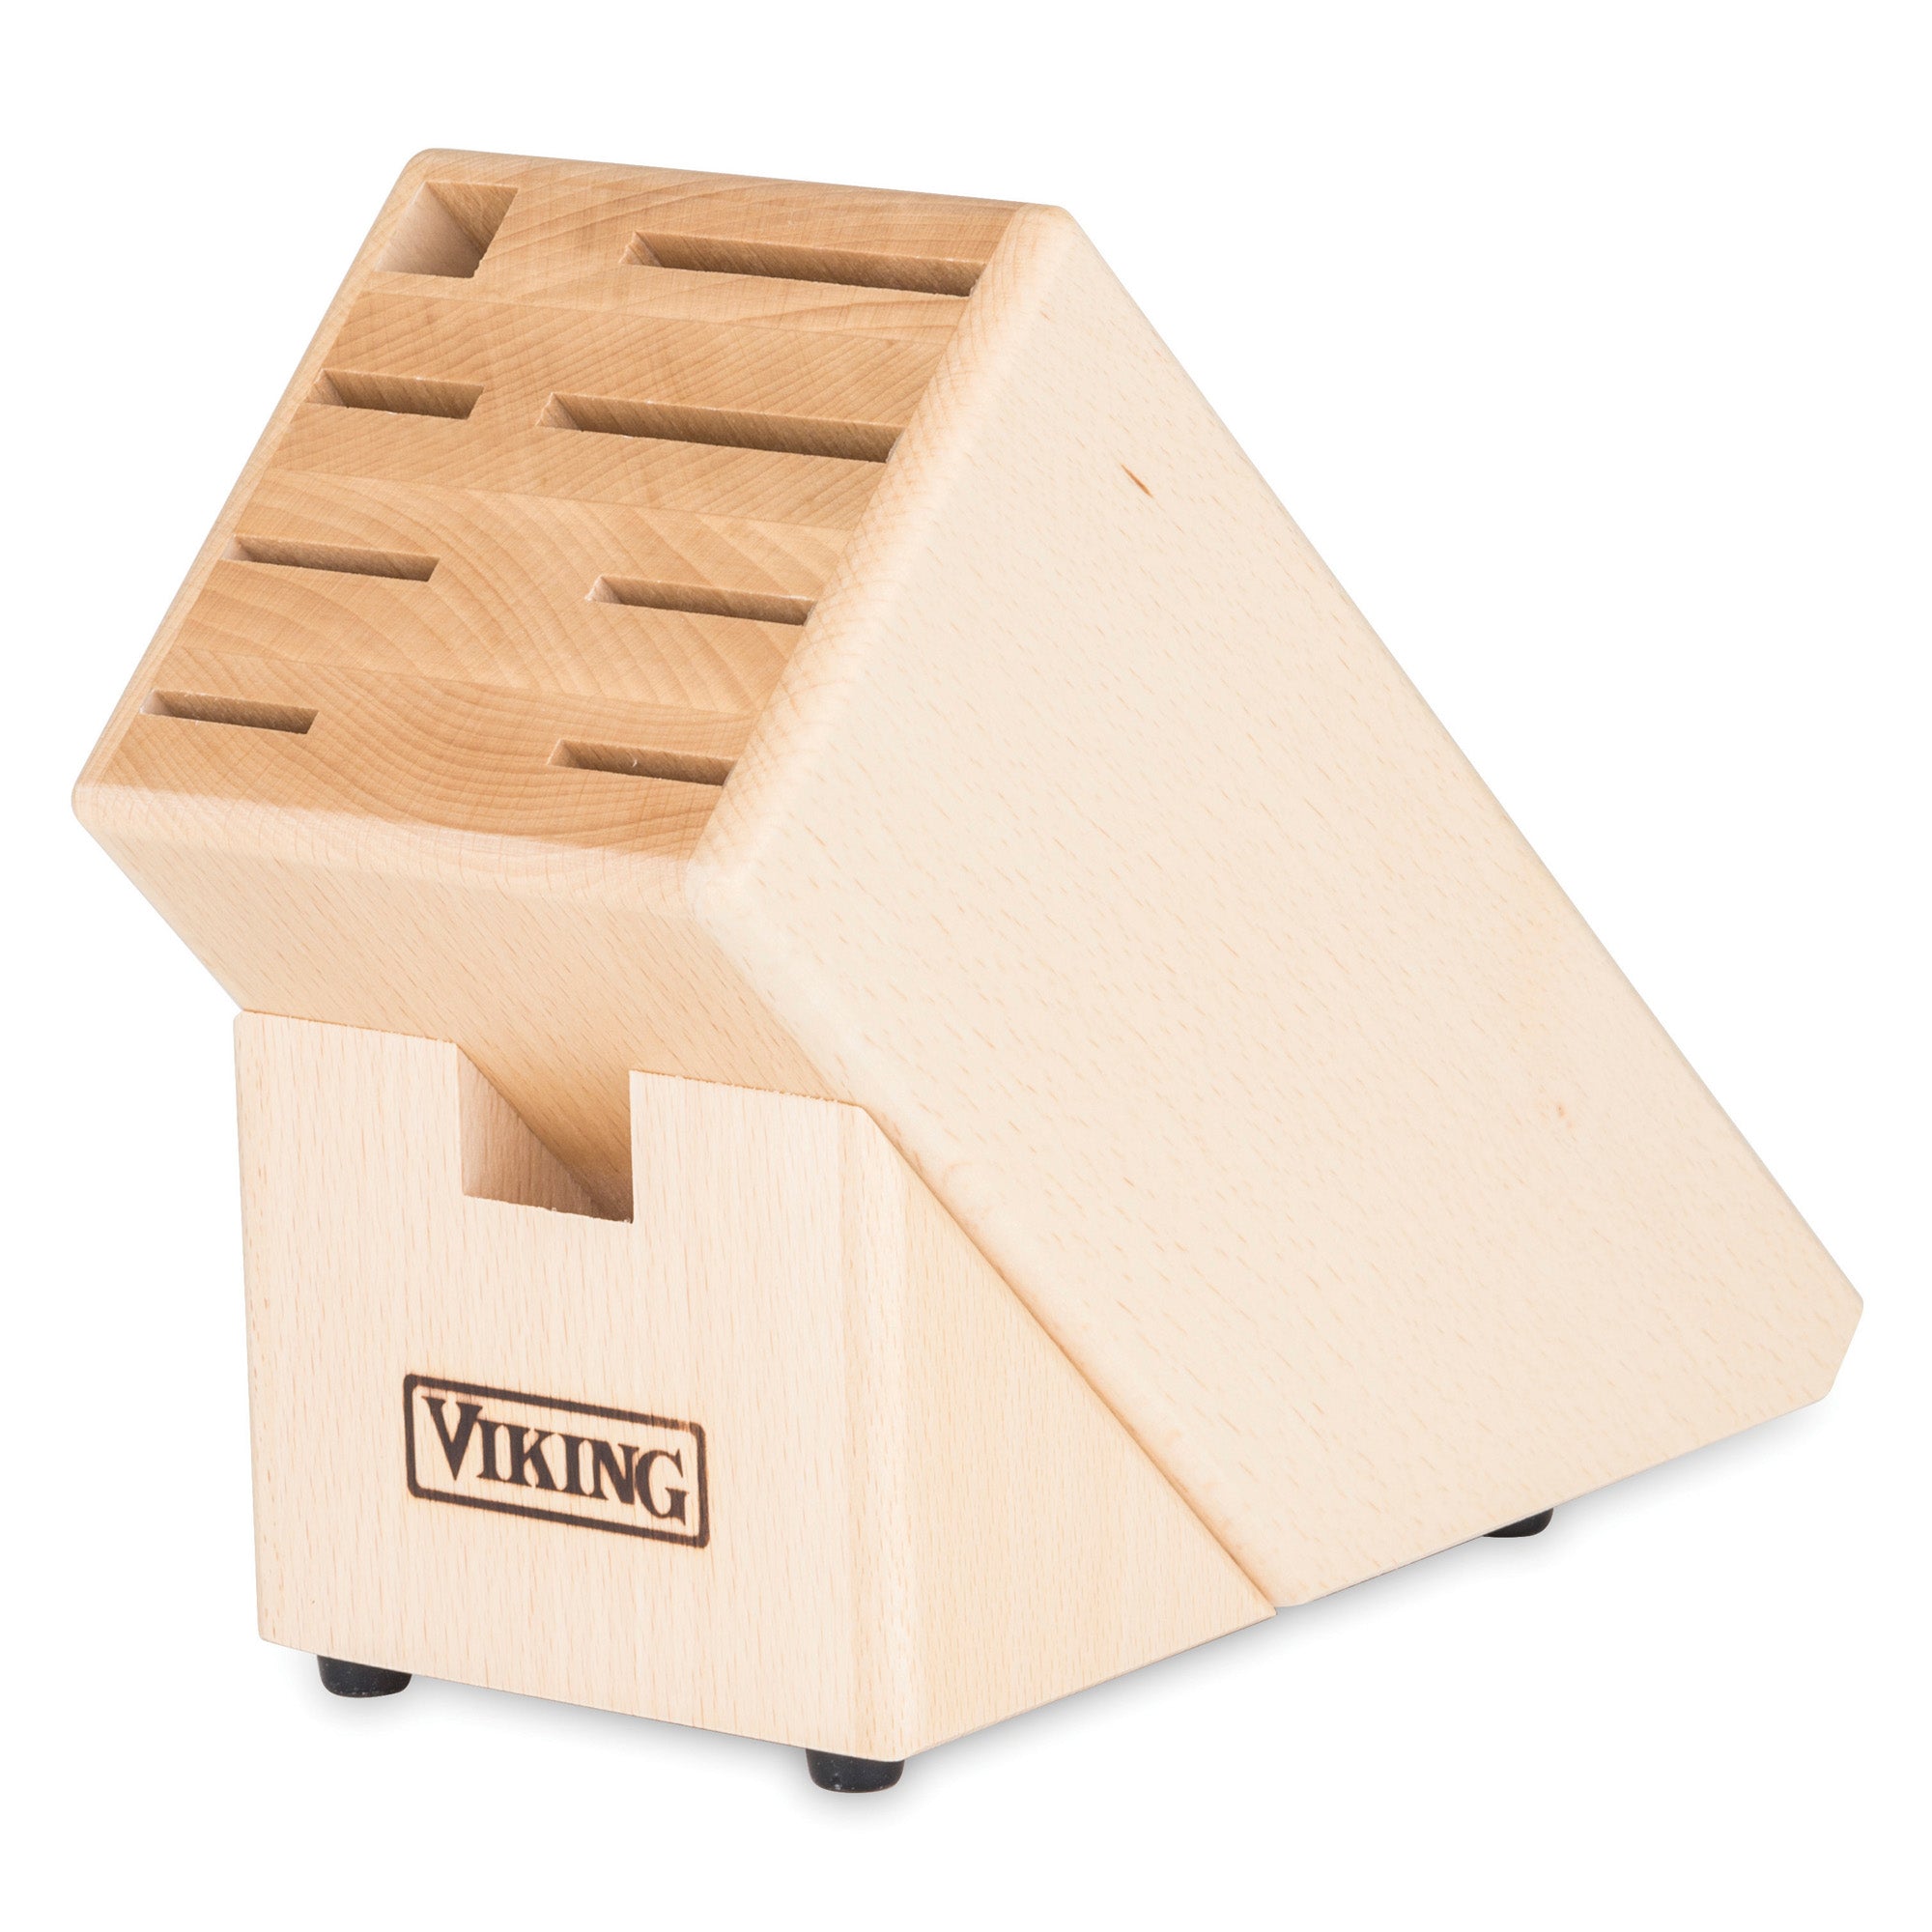 Viking 17-piece Cutlery Set with Light Walnut Color Block – Domaci